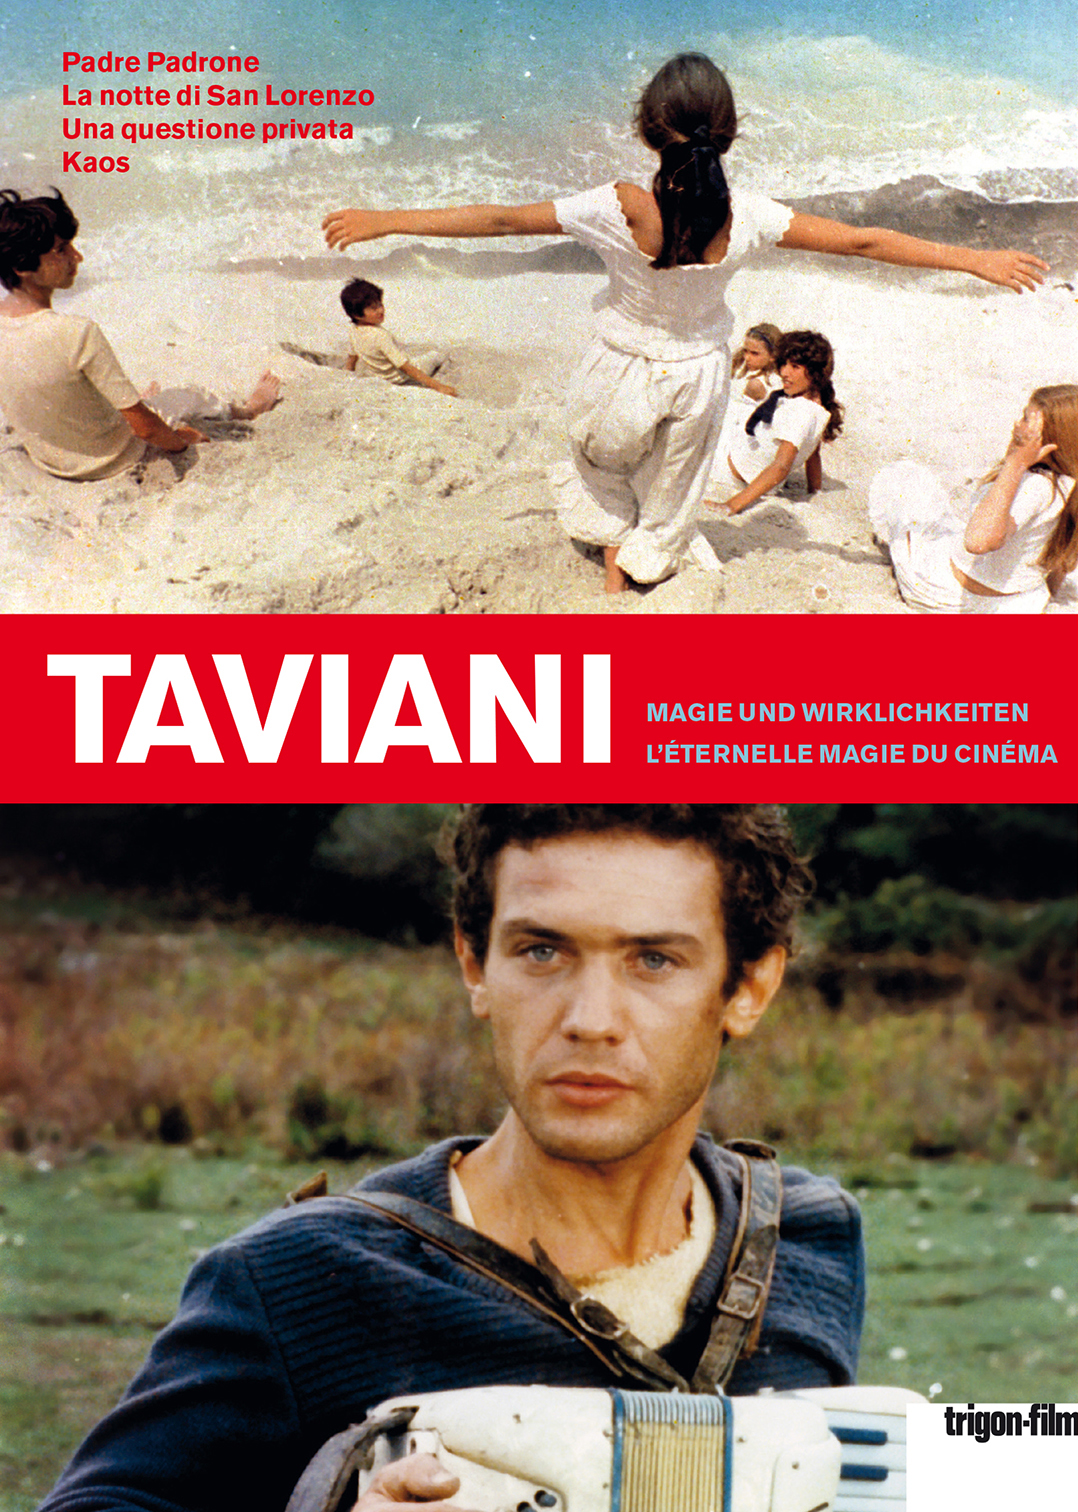 Paolo Vittorio Taviani  Box DVD trigon film  org